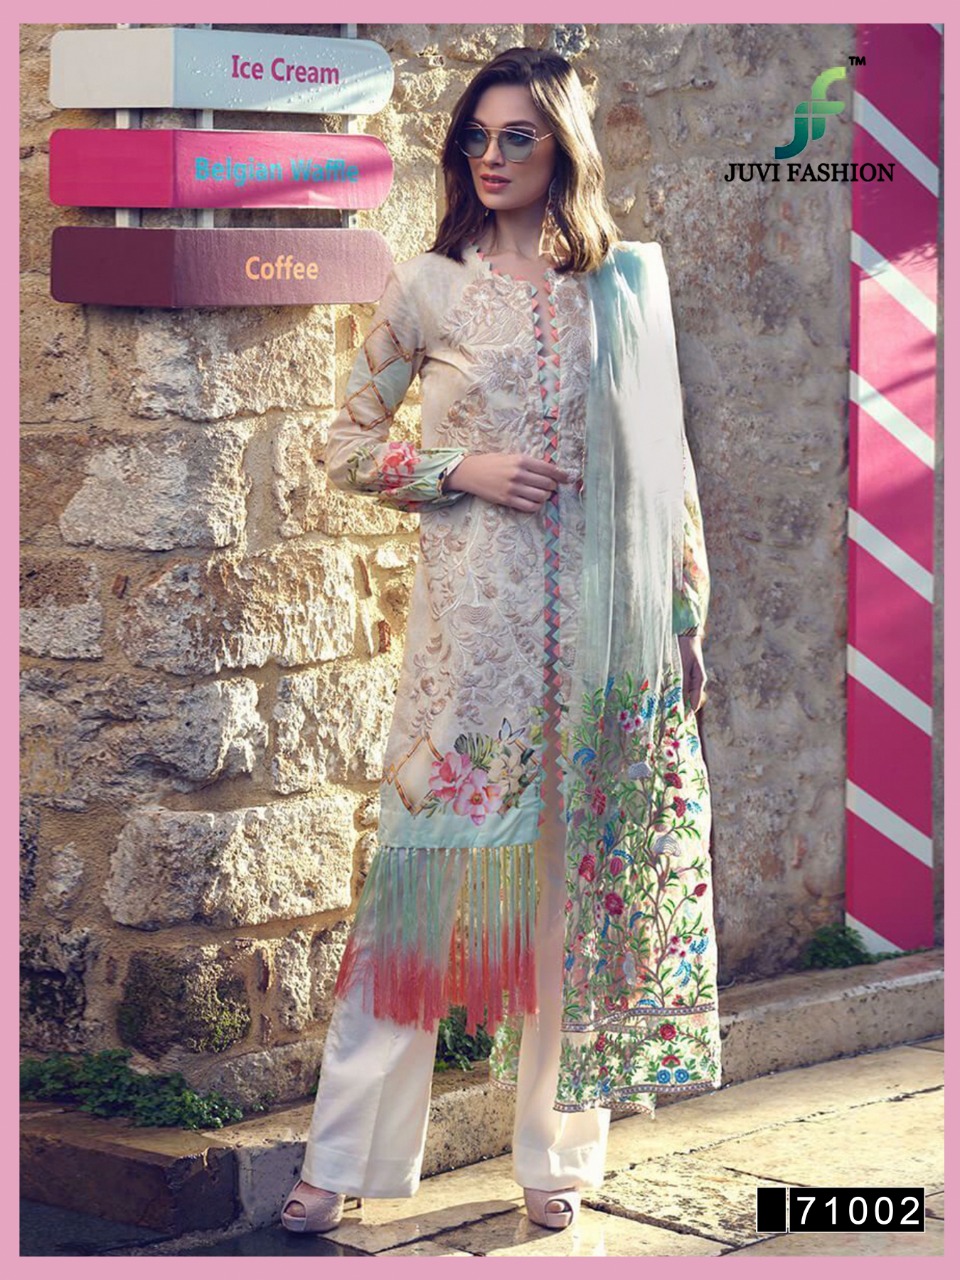 juvi fashion sarang vol 2 cotton  authentic fabric salwar suit catalog